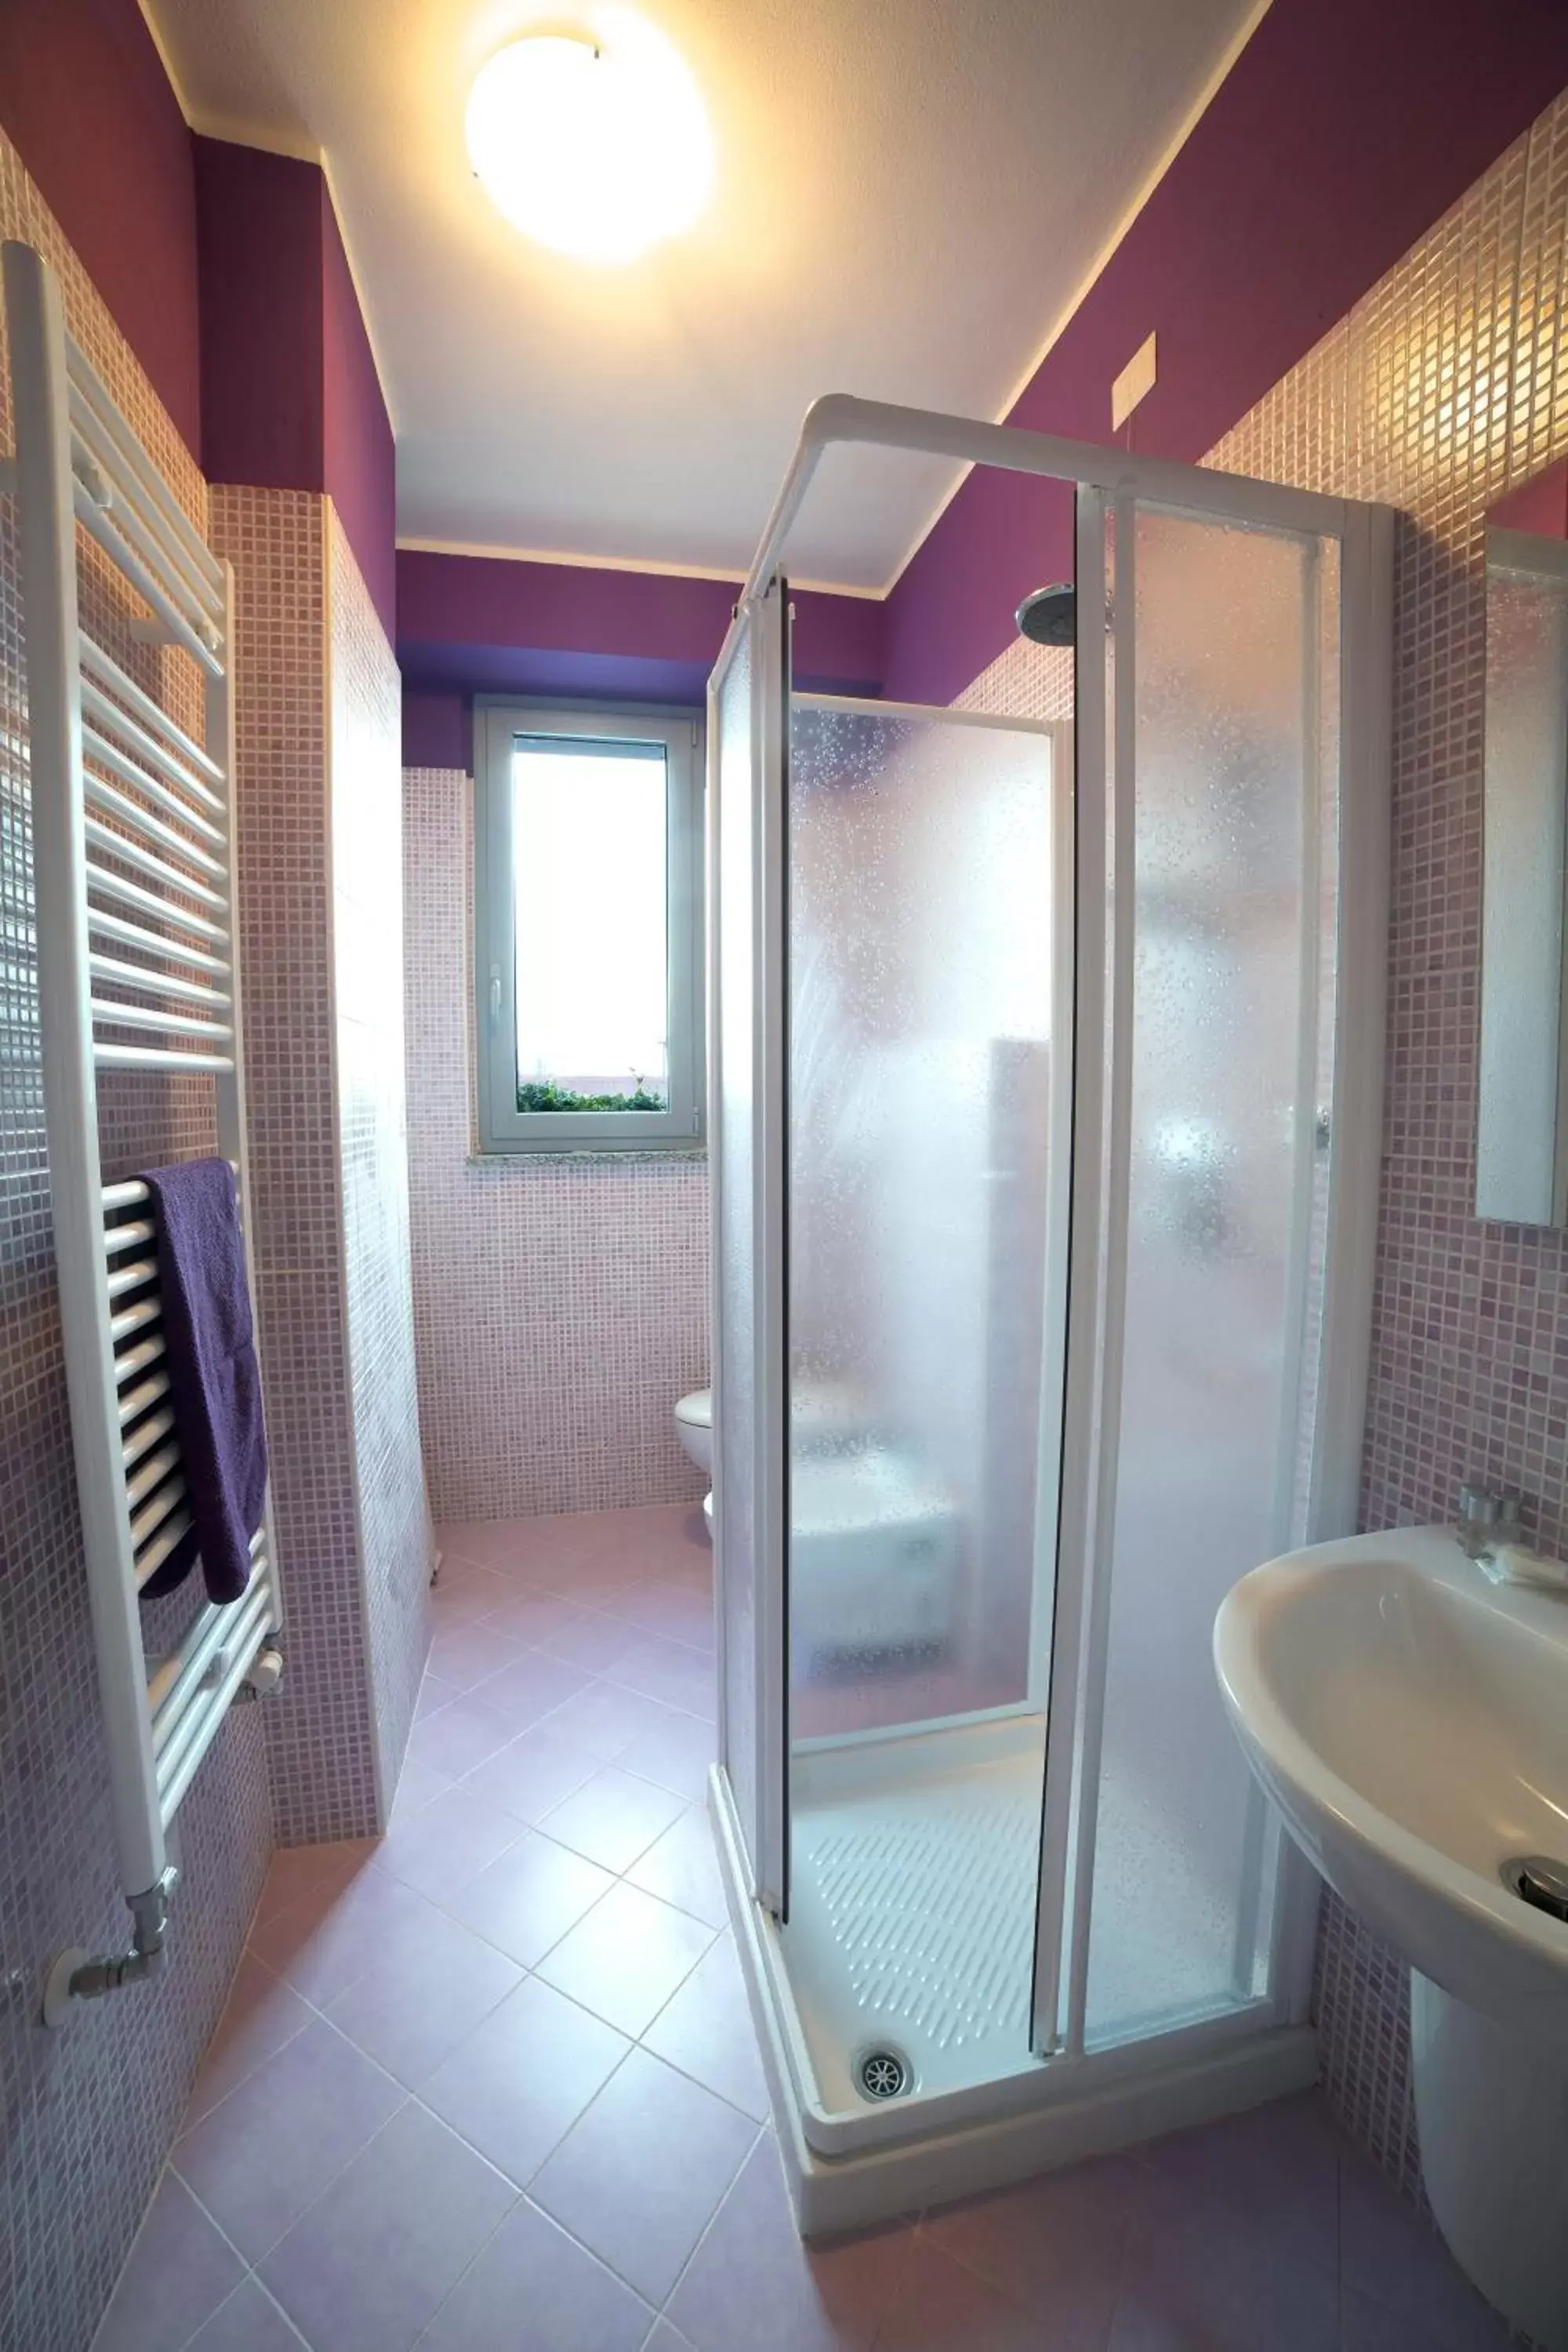 Bathroom in Dreams Hotel Residenza Pianell 10